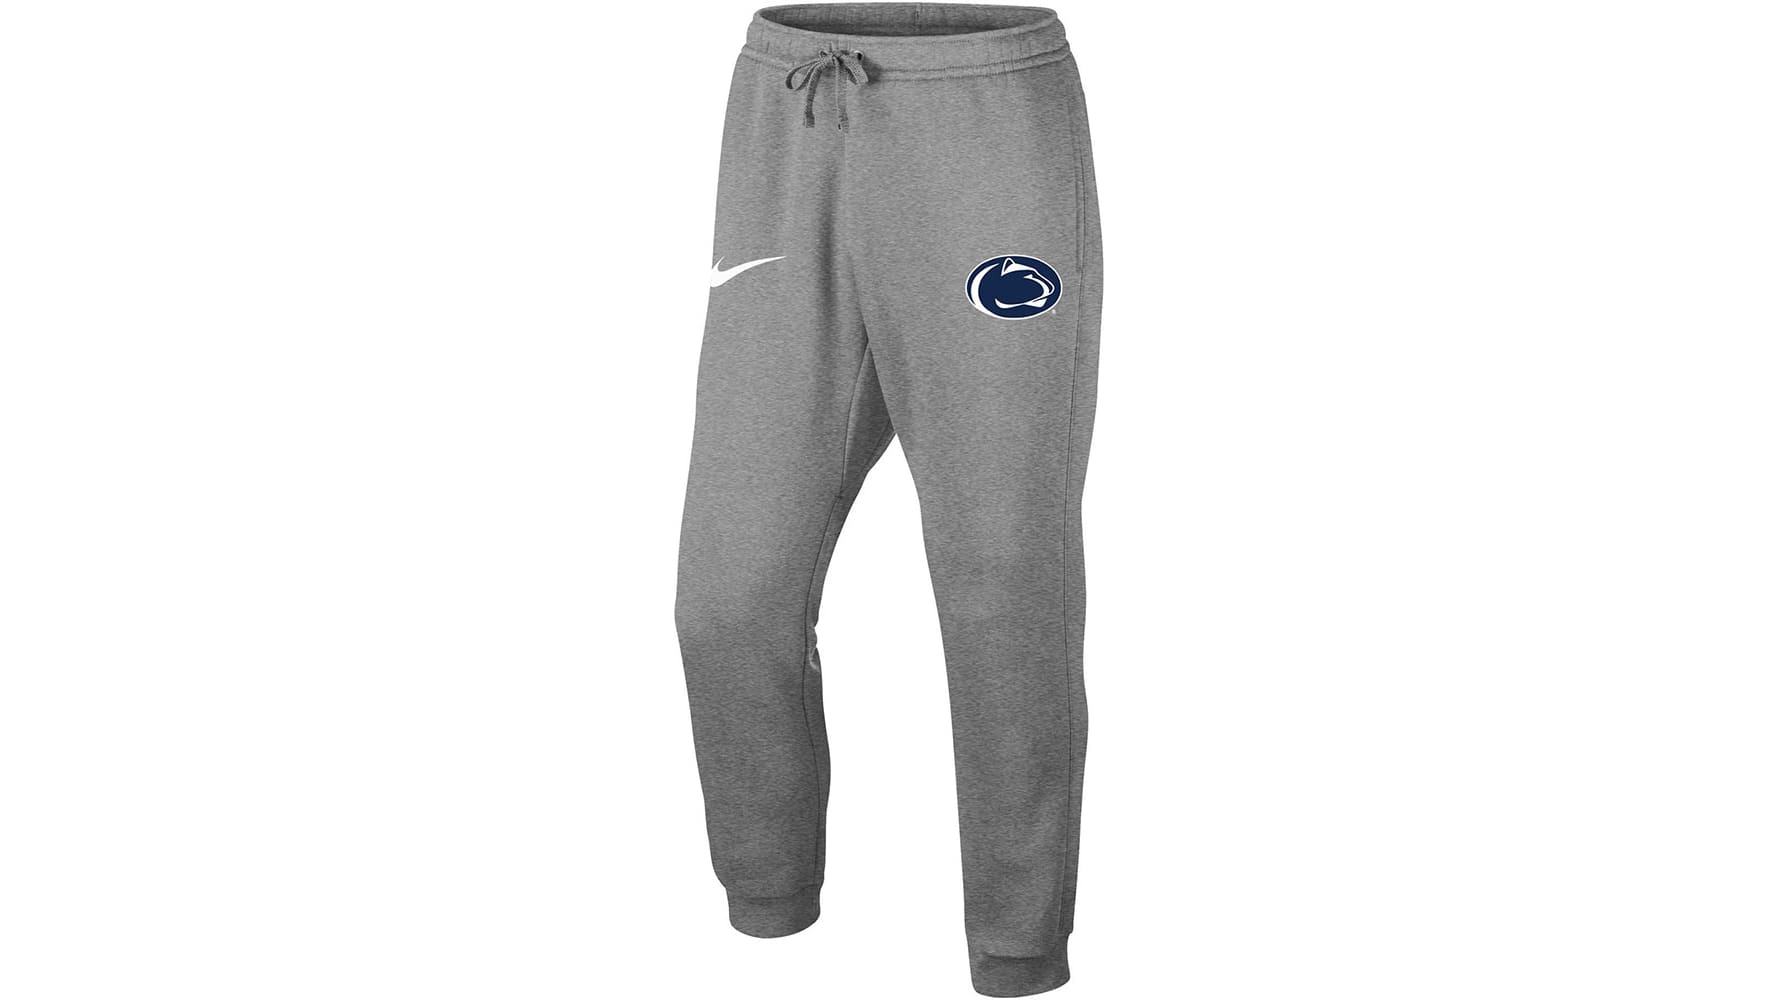 Penn State University Champion Women's Sweatpants Oxford Grey Nittany Lions  (PSU)